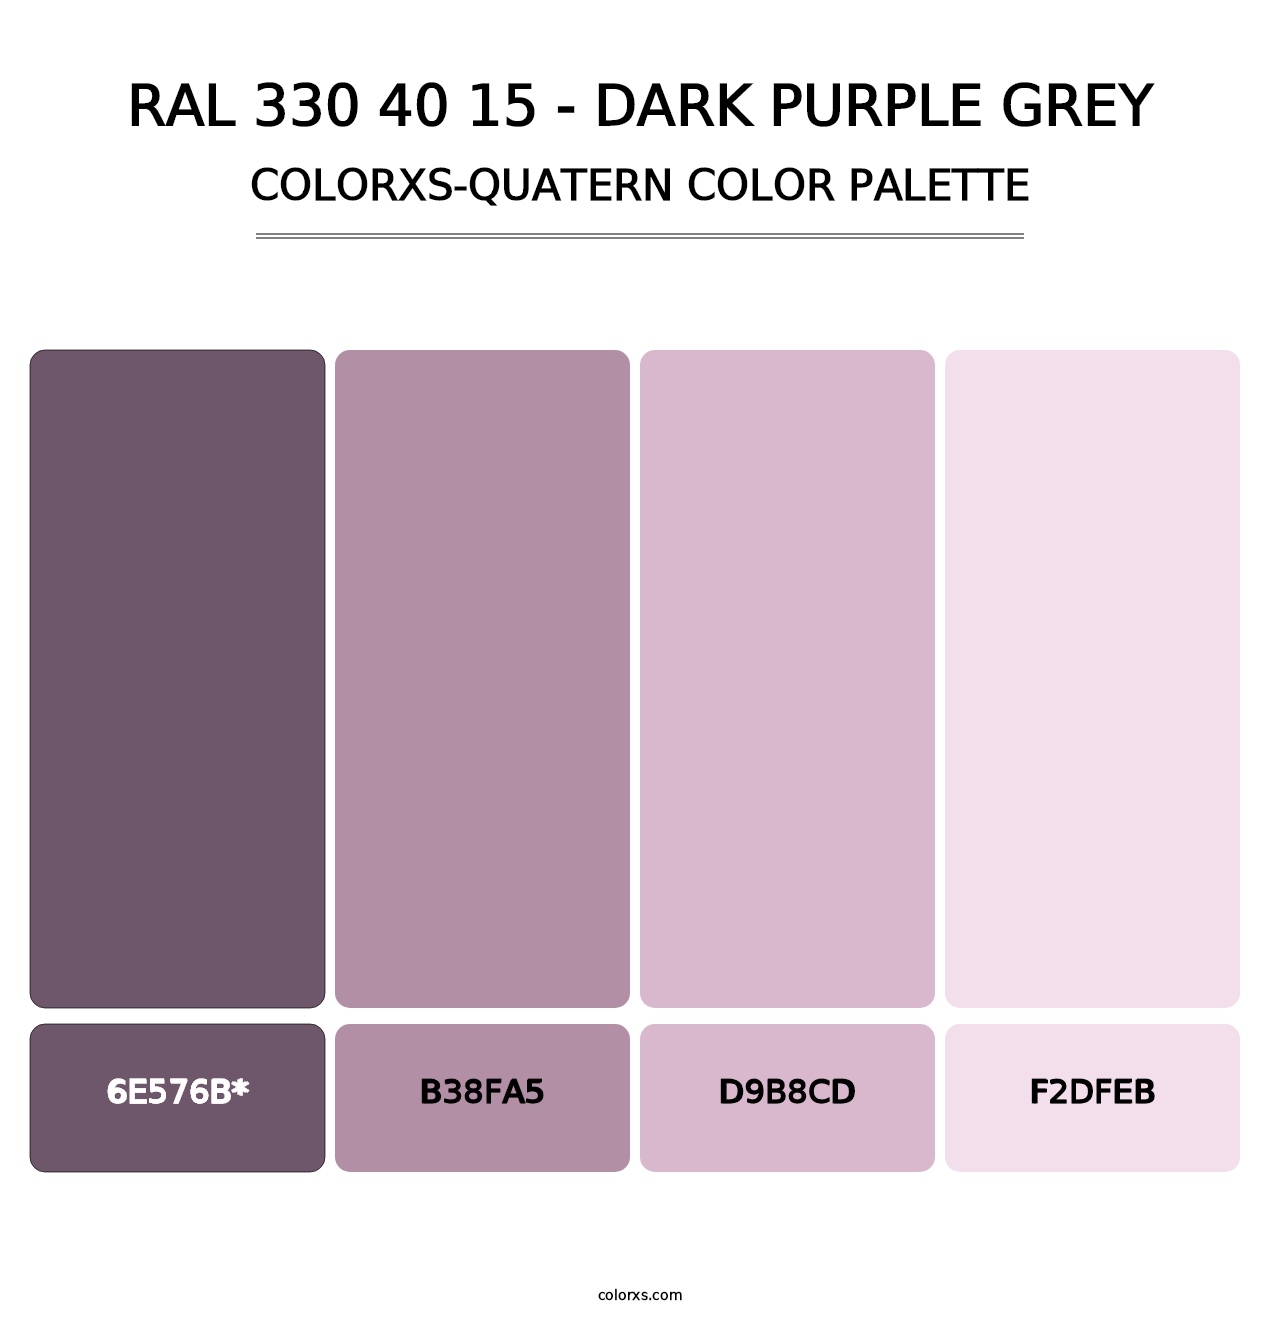 RAL 330 40 15 - Dark Purple Grey - Colorxs Quatern Palette